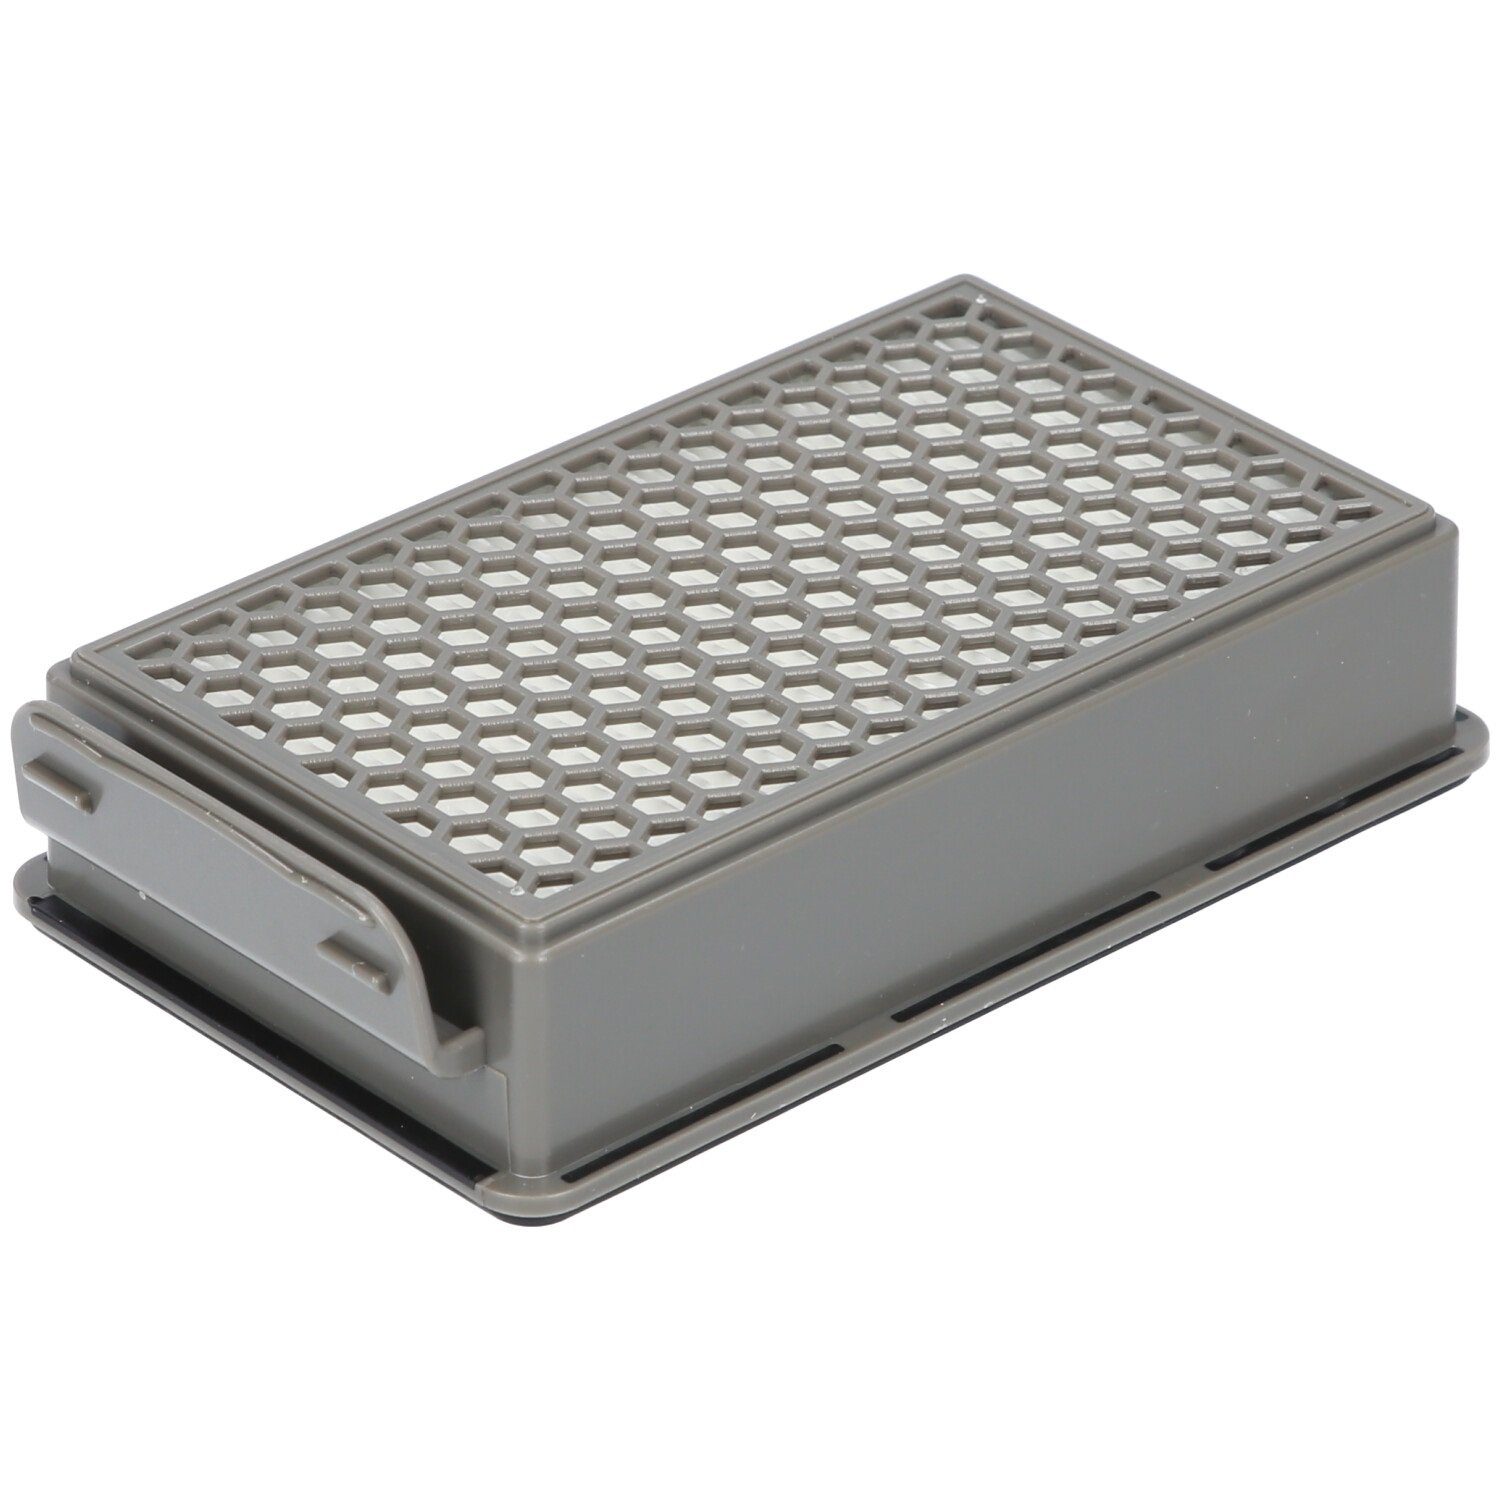 McFilter Filter-Set TW3969EA, TW3953EA, für für 2x ZR005901 Alternative Rundfilter, TW3985EA,TW3999EA, geeignet 2x Tefal TW3931EA, Filterkassette